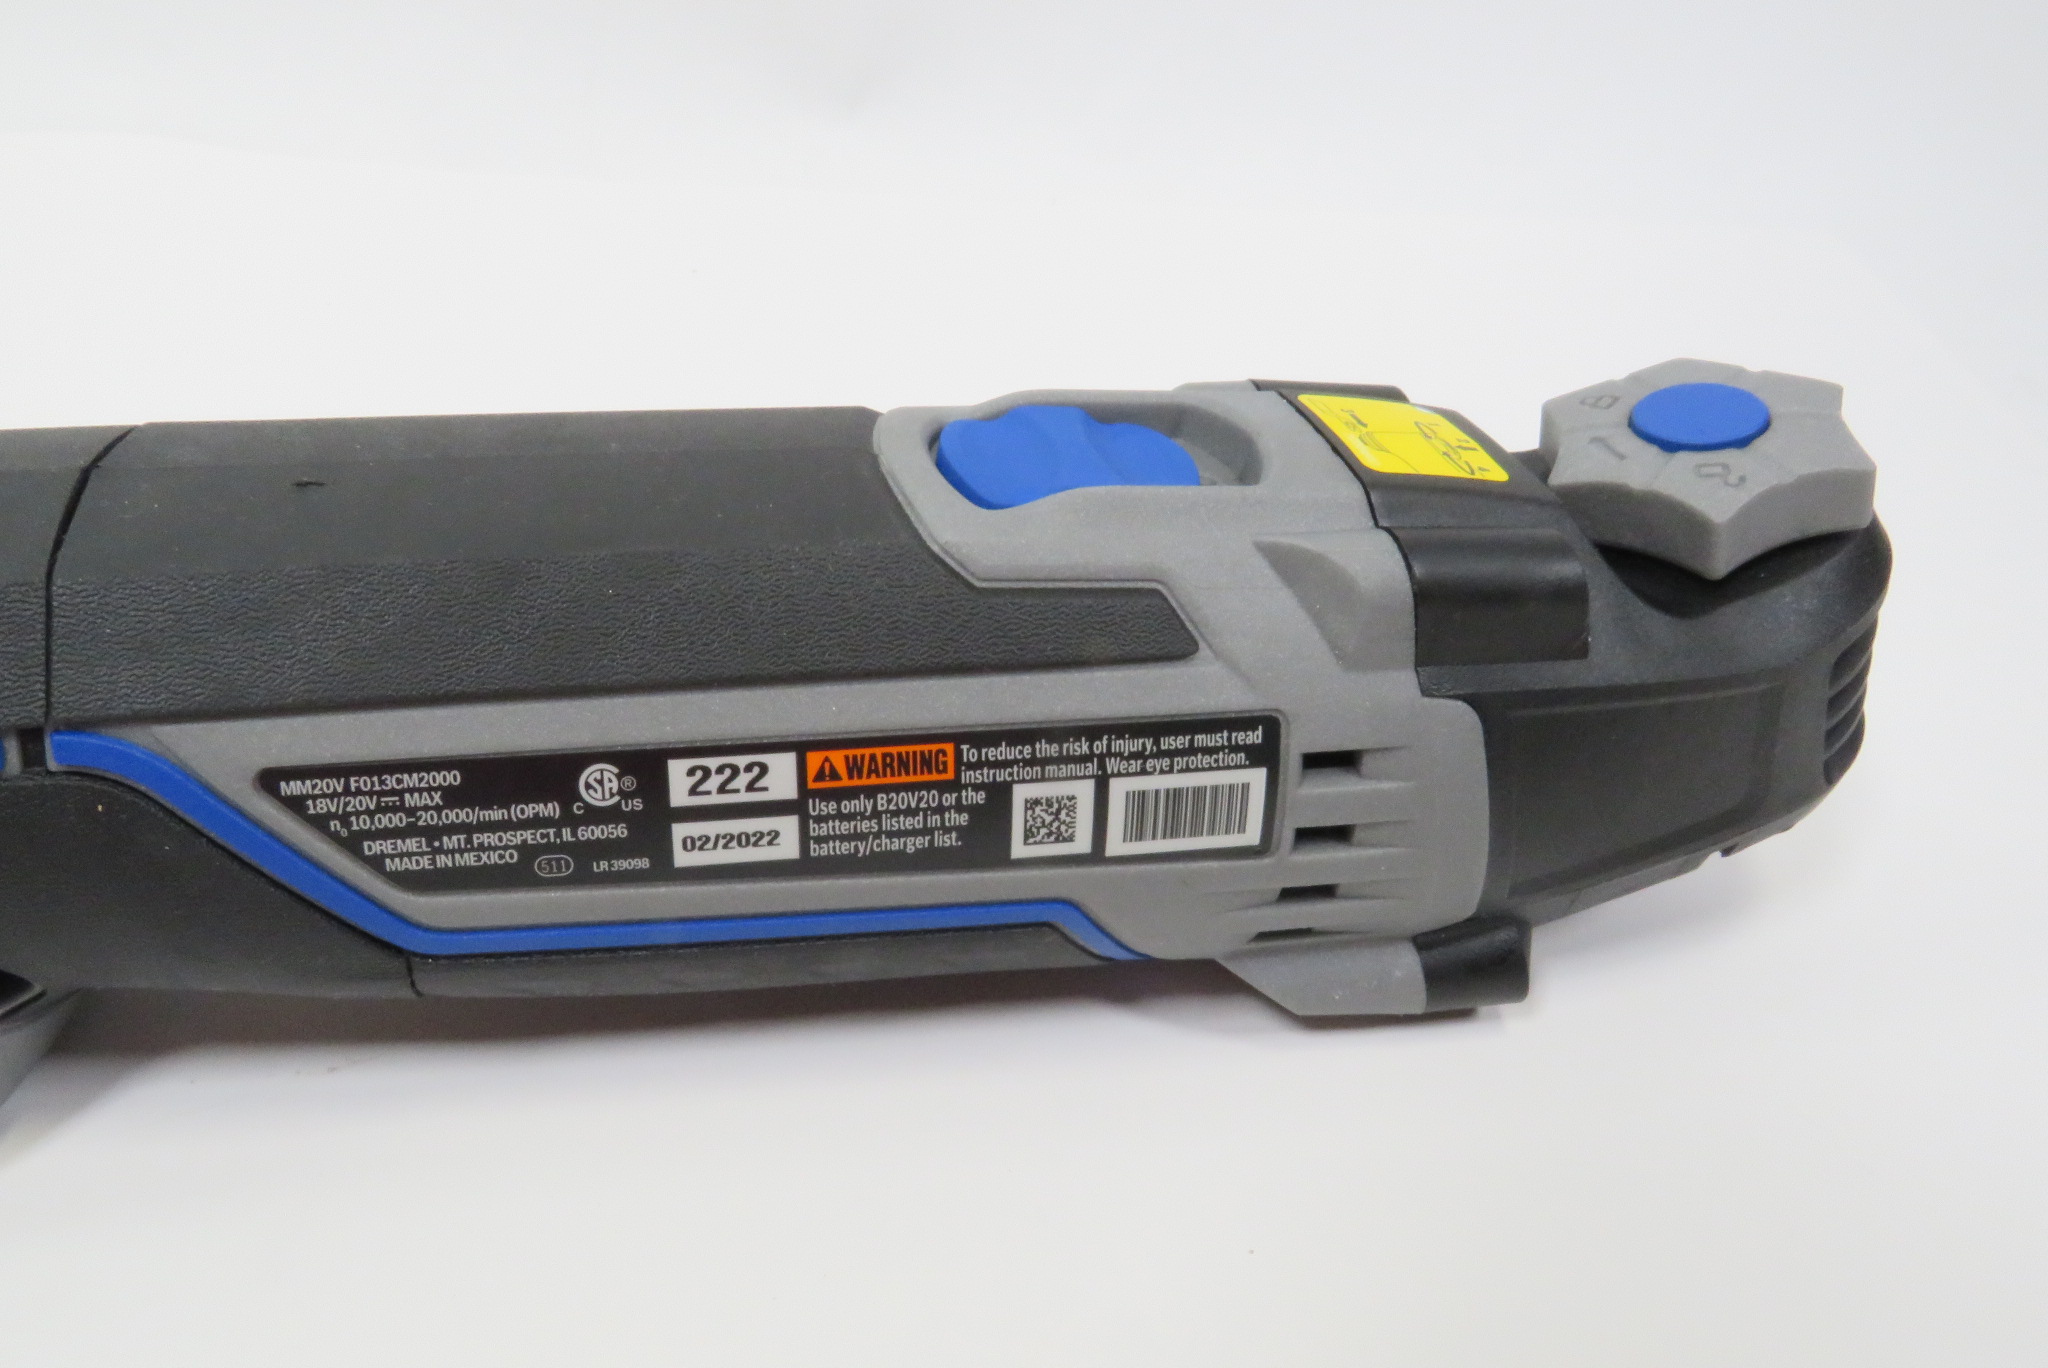 Dremel Multi-Max MM20V-02 Cordless Oscillating Tool Kit with (2) Batteries - 3